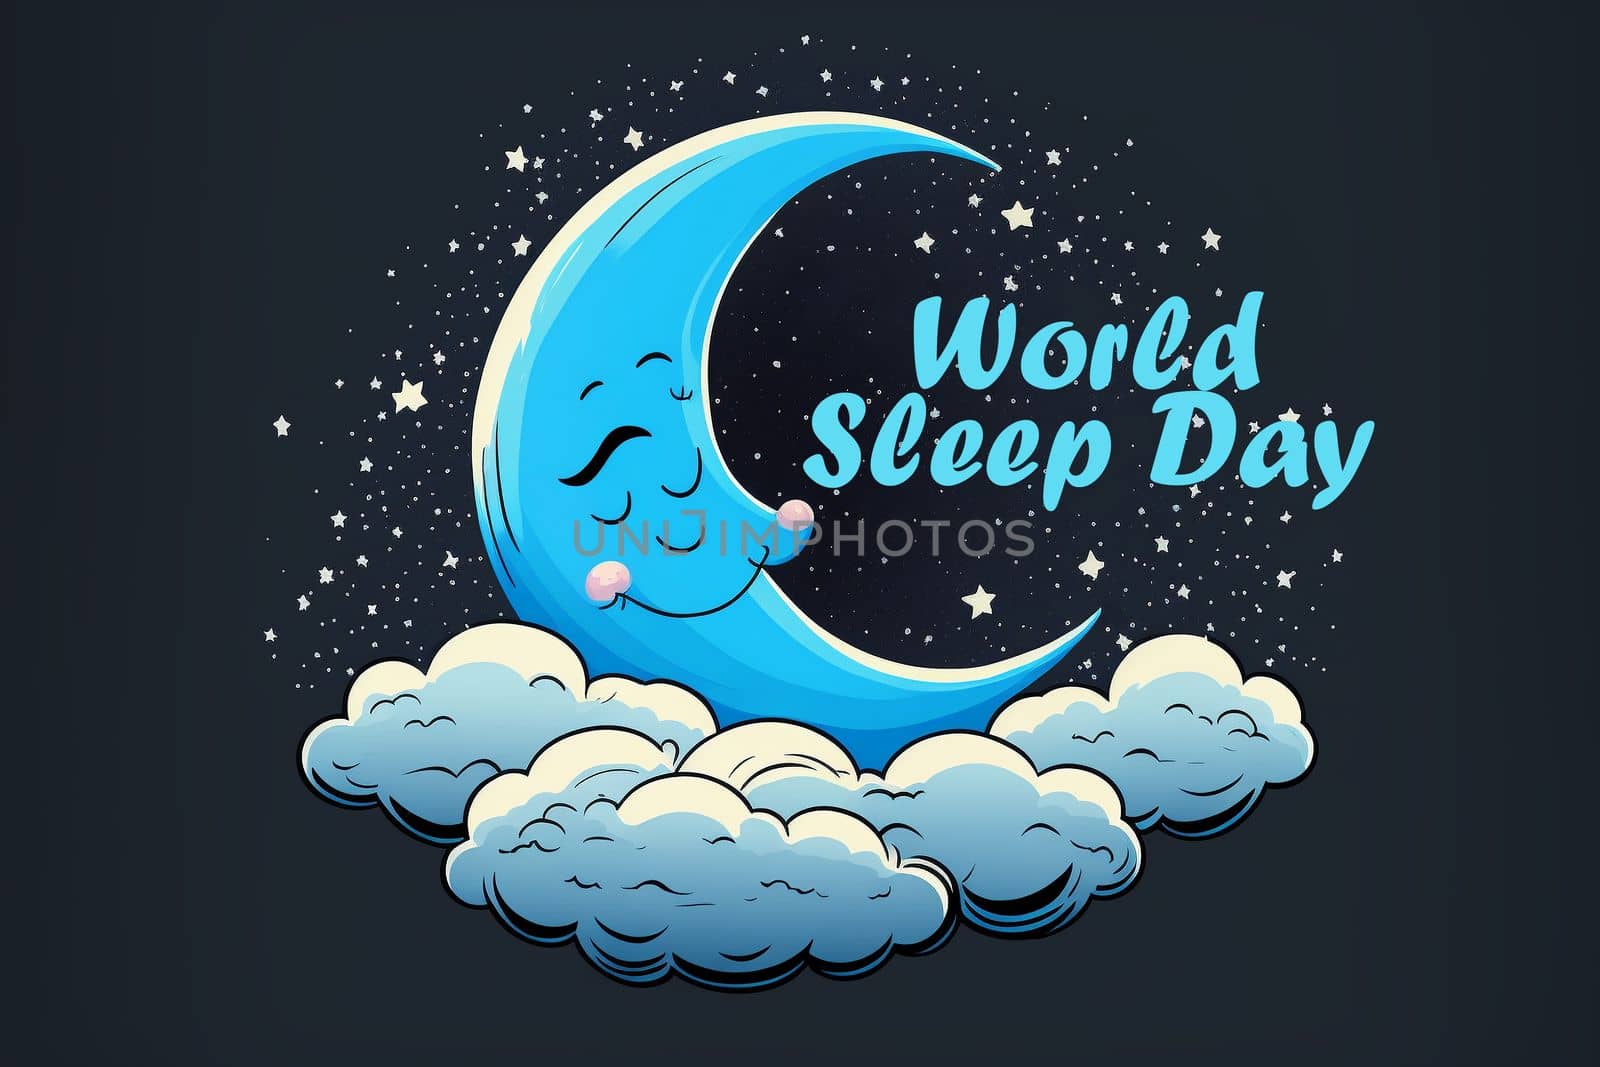 World Sleep Day postcard or banner. illustration of the sleeping moon, sleeping on the international holiday.